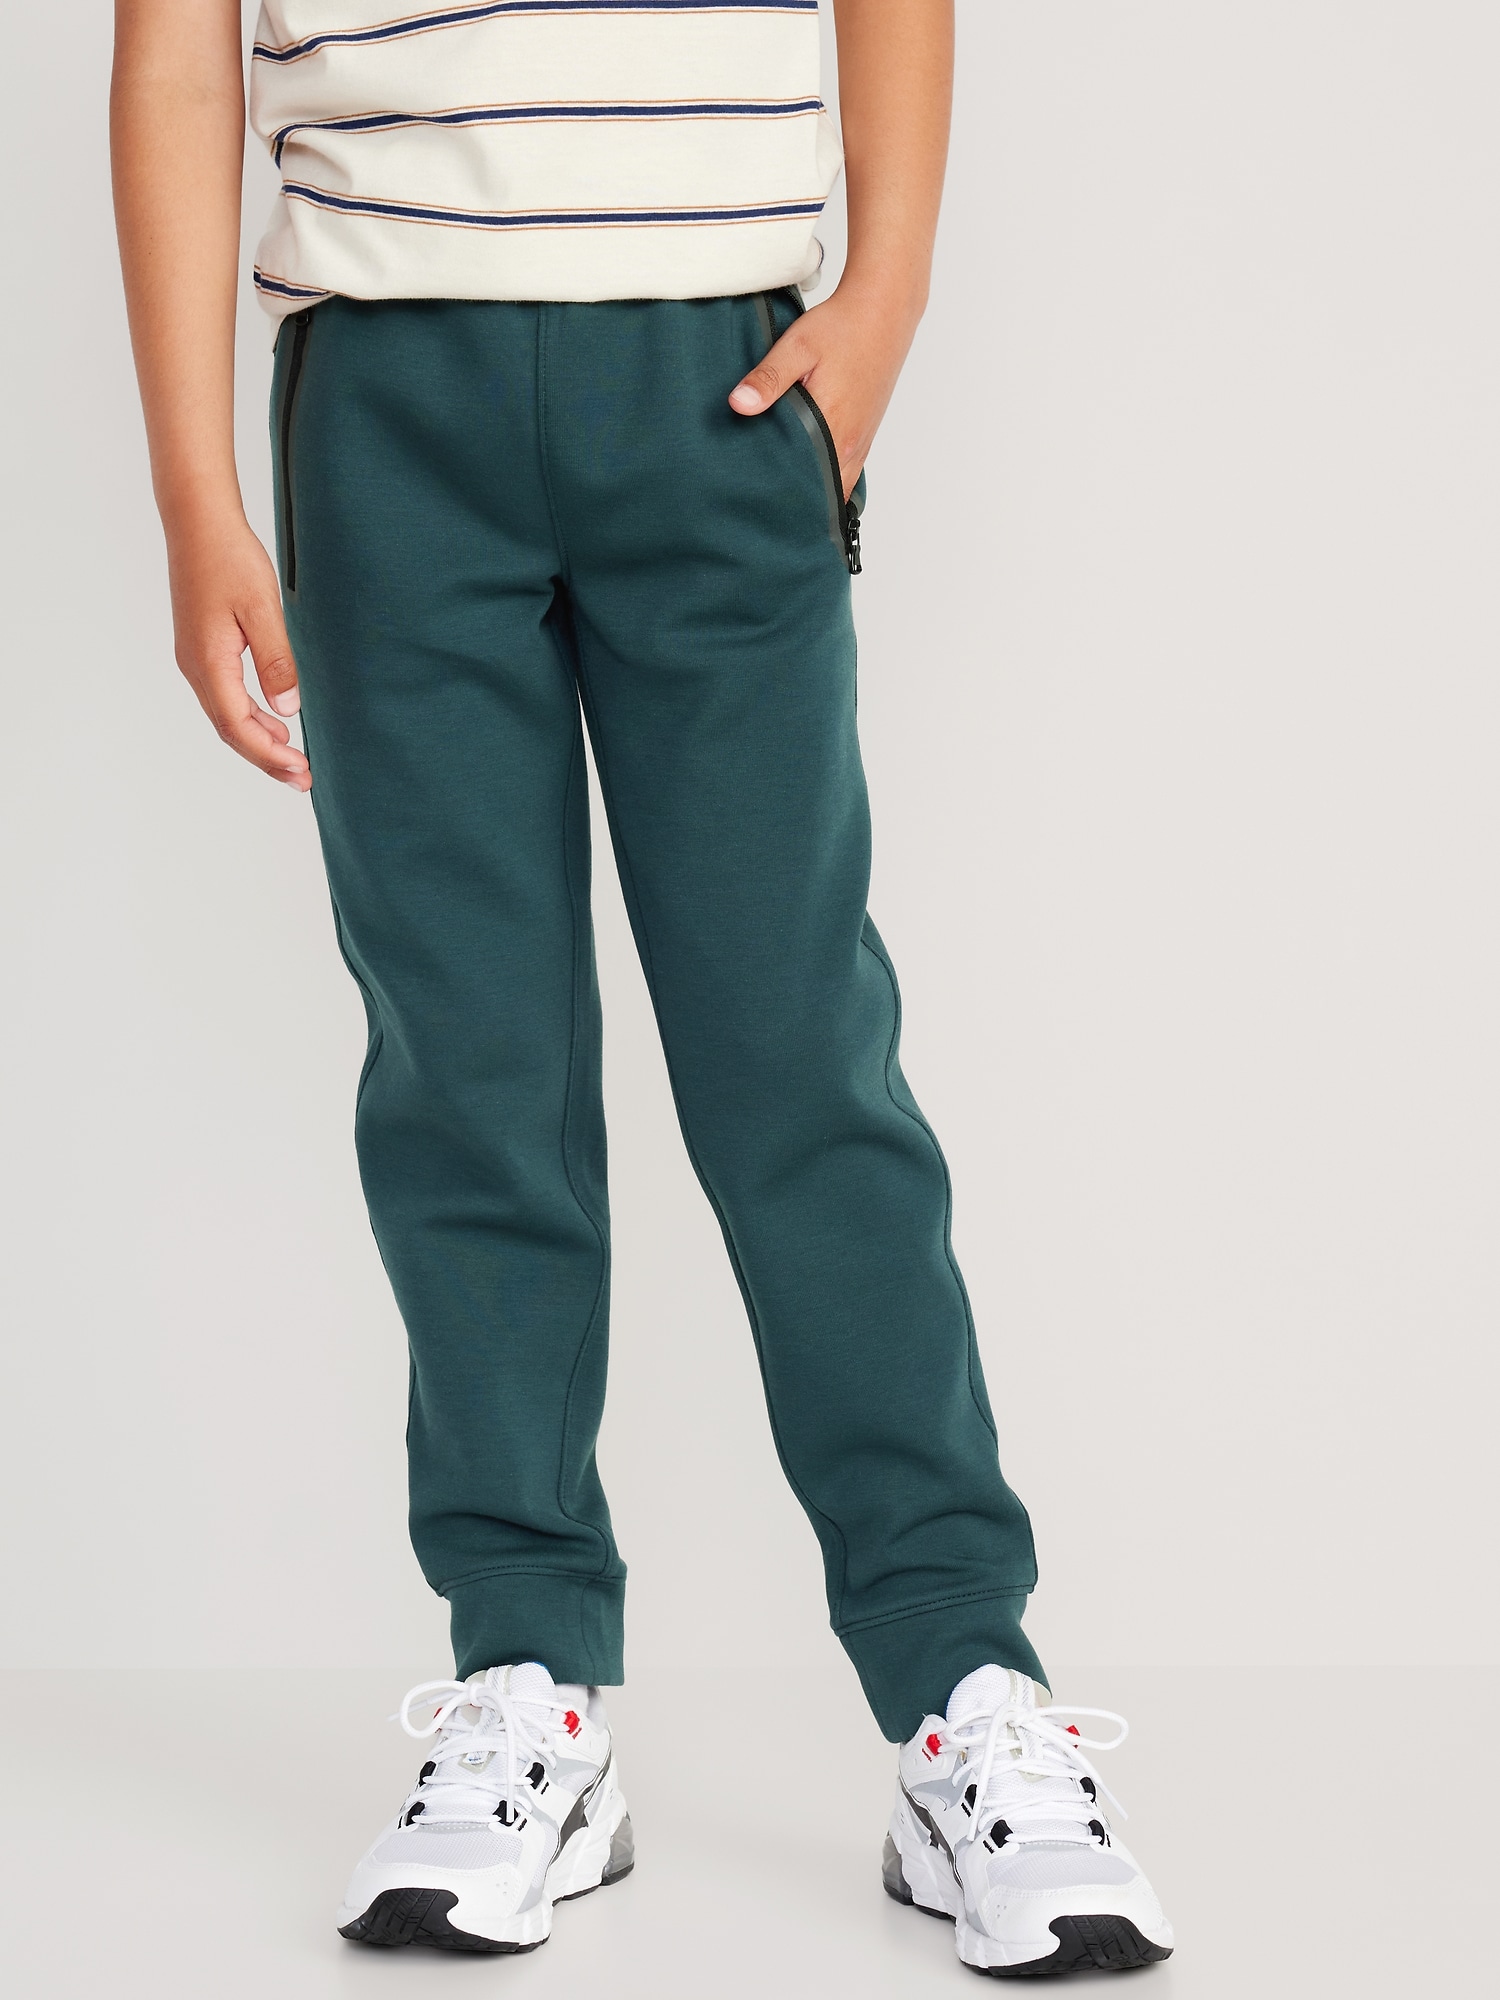 Boys' Elastic Waistband Slim Fit Jogging School Pants for Kids Size 6-18  Flat Waist